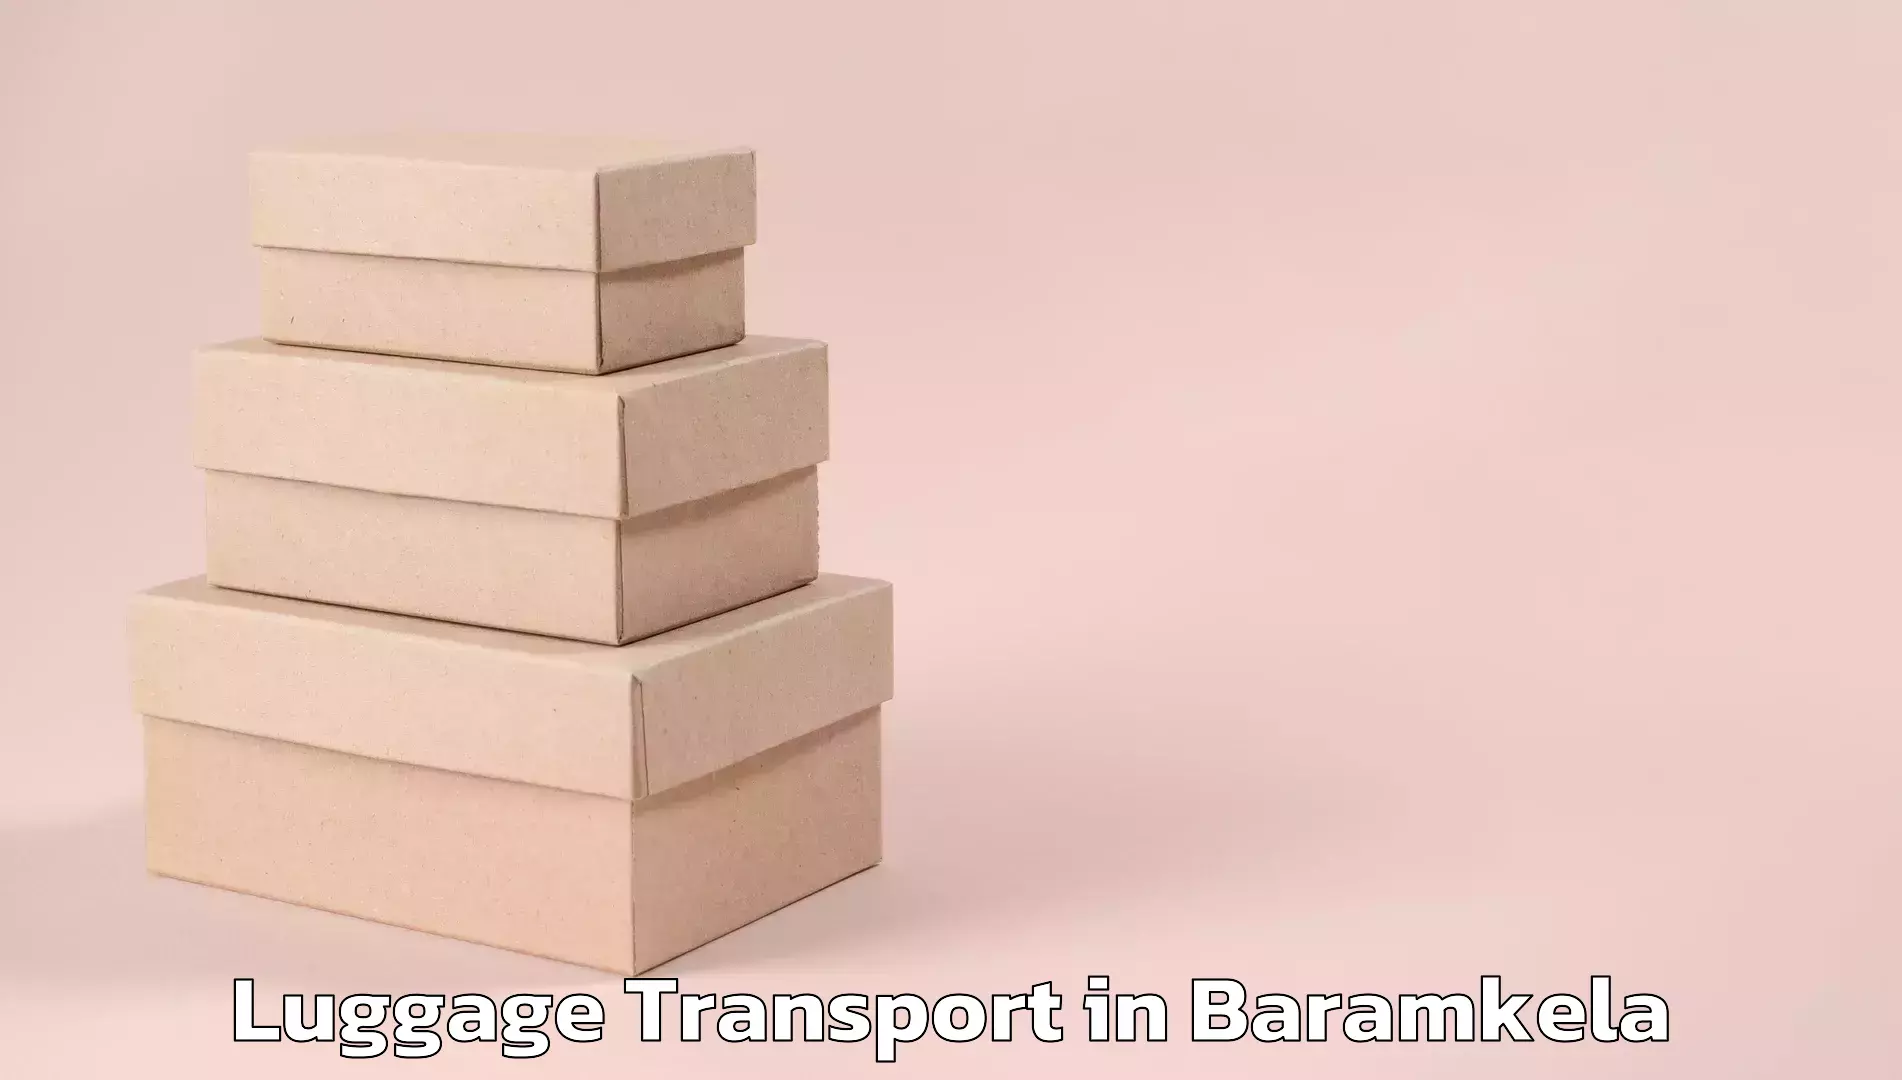 Luggage transport deals in Baramkela